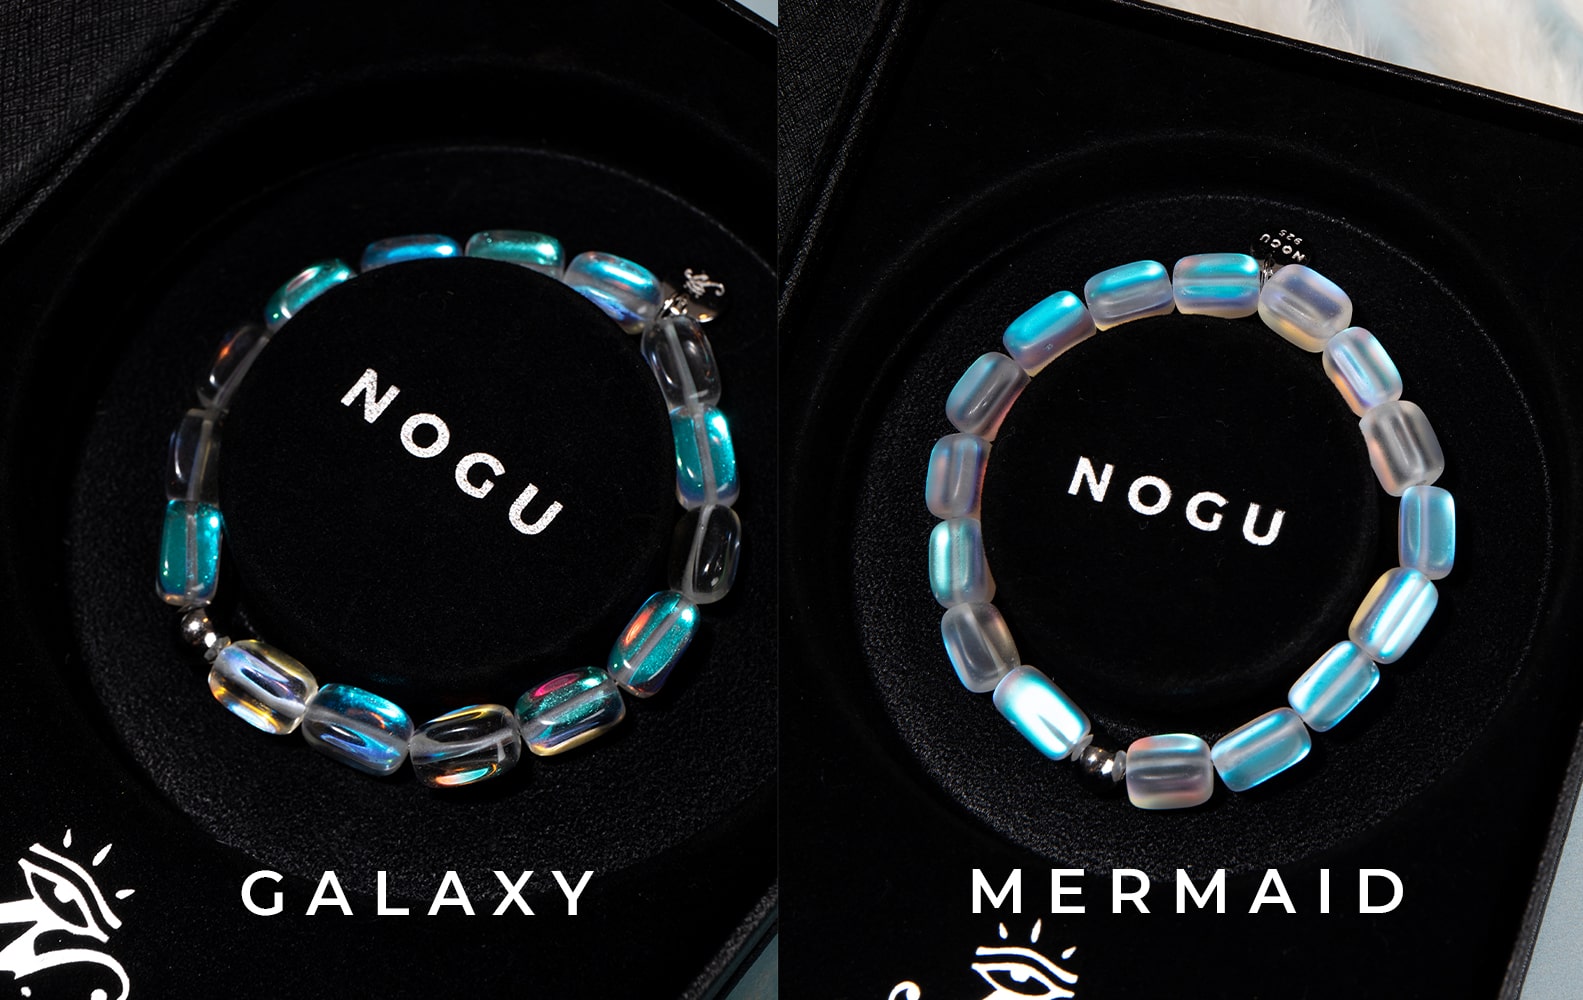 NOGU Real Mermaid Glass and Galaxy Glass Comparison